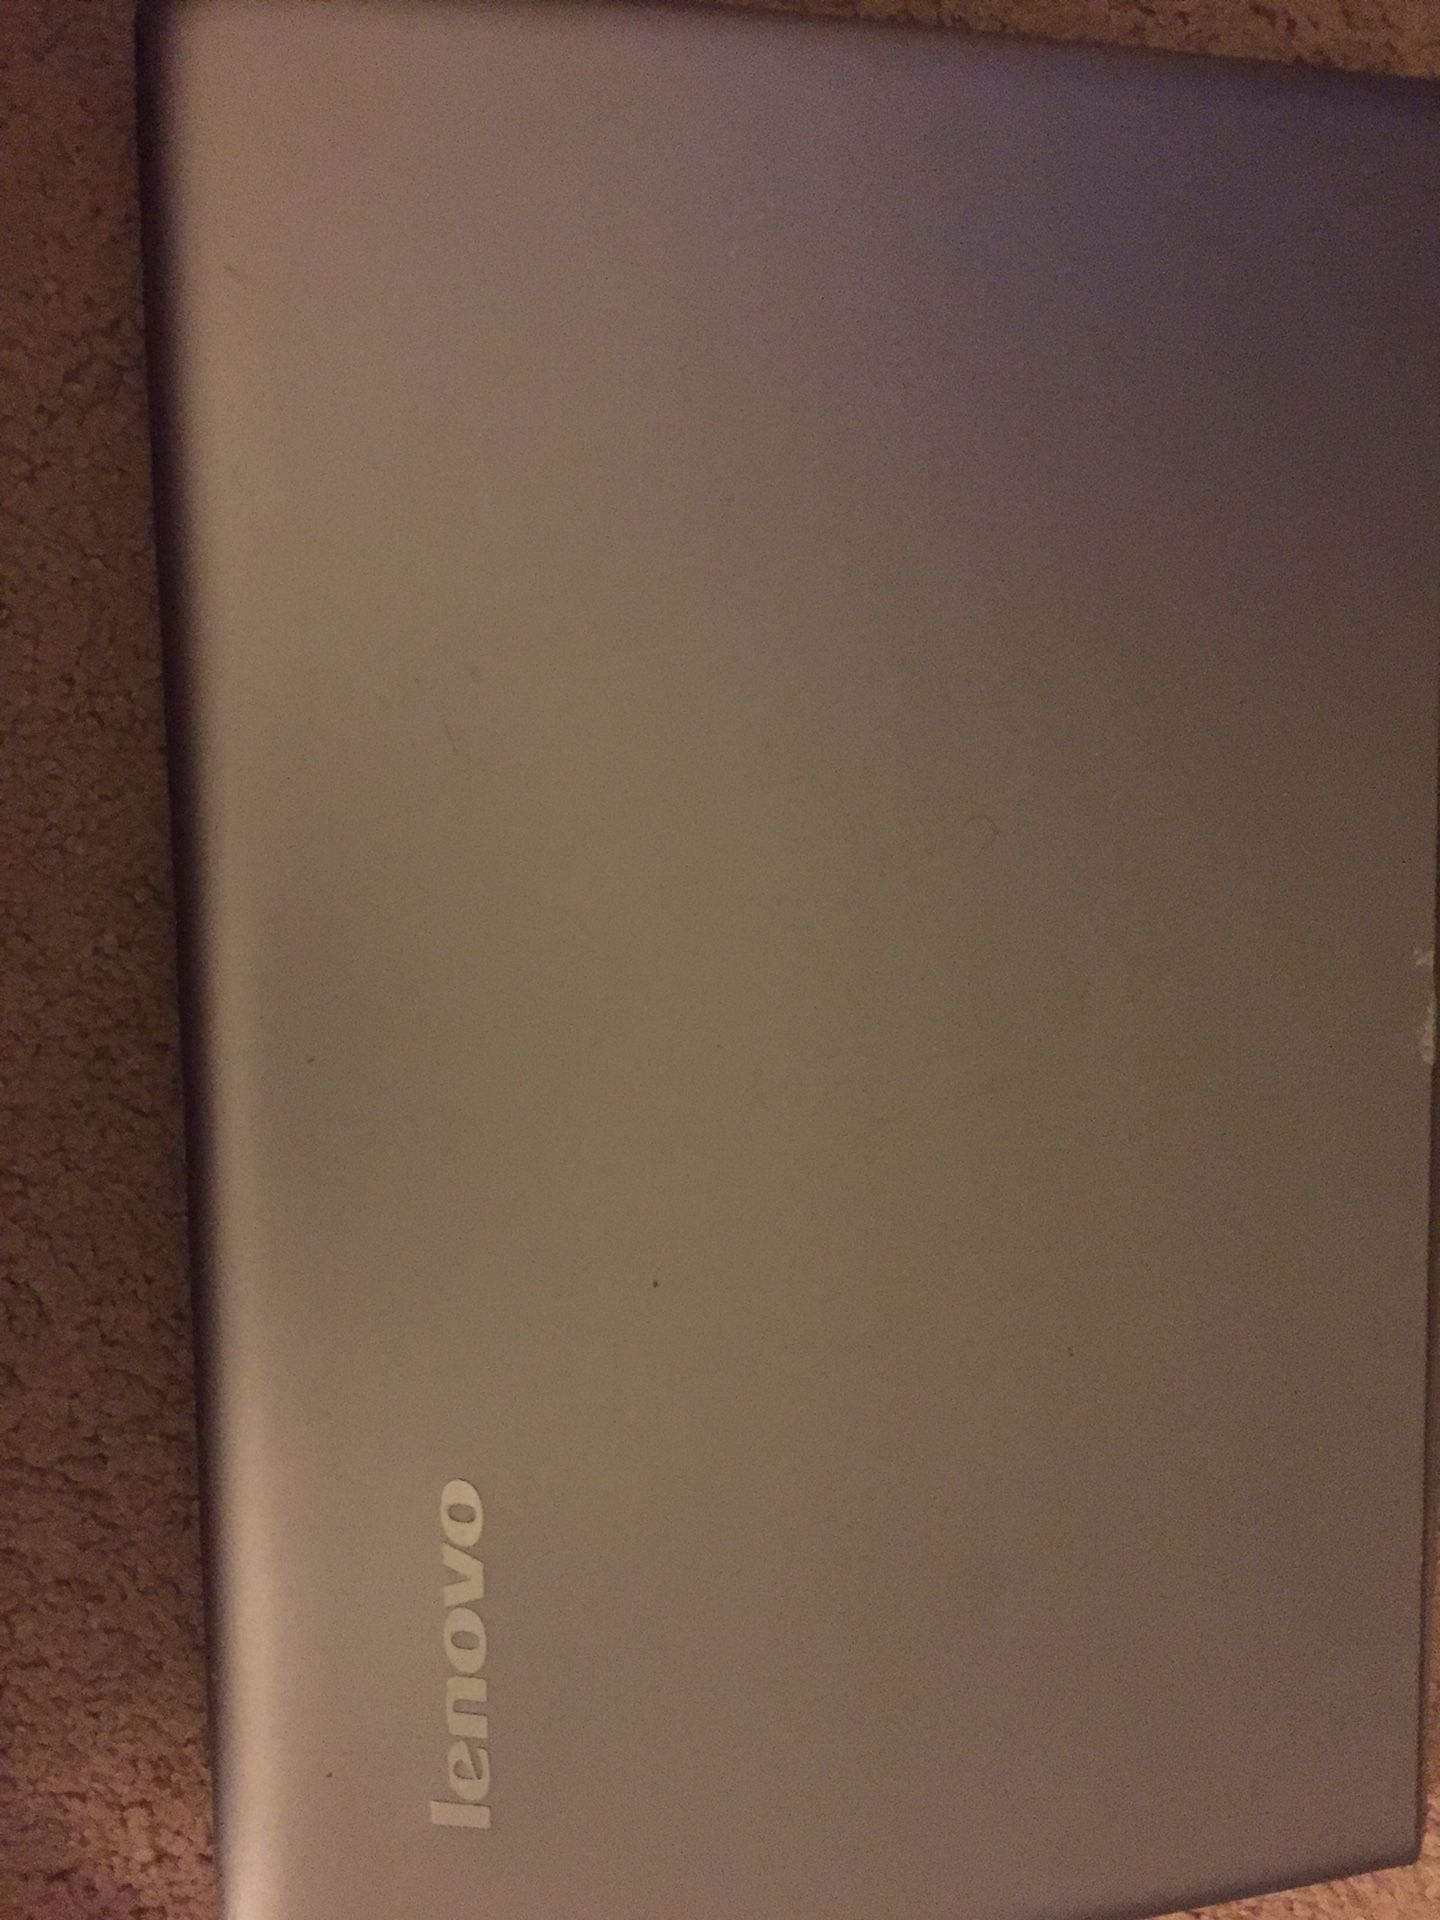 Lenovo touch screen idea pad laptop 2017